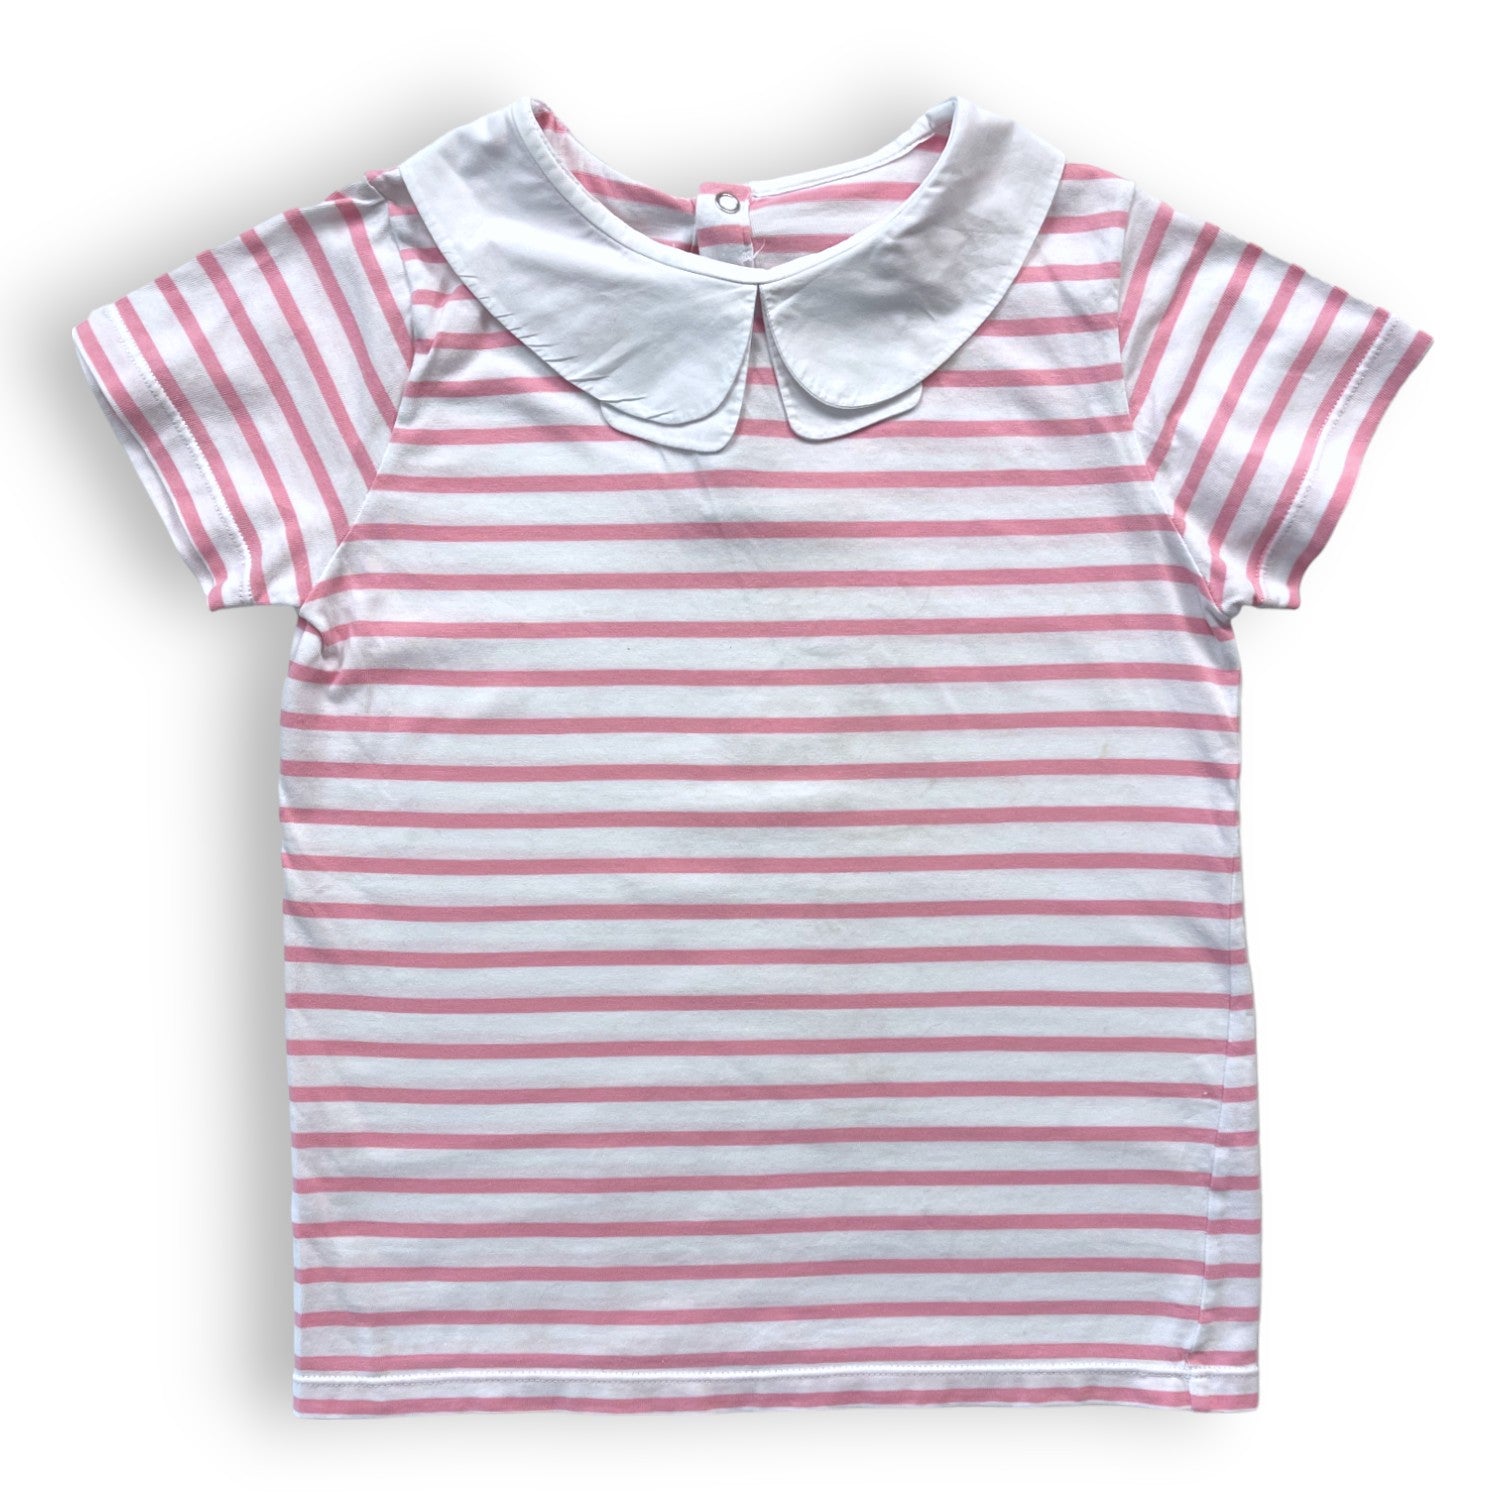 JACADI - T shirt rayé rose - 8 ans